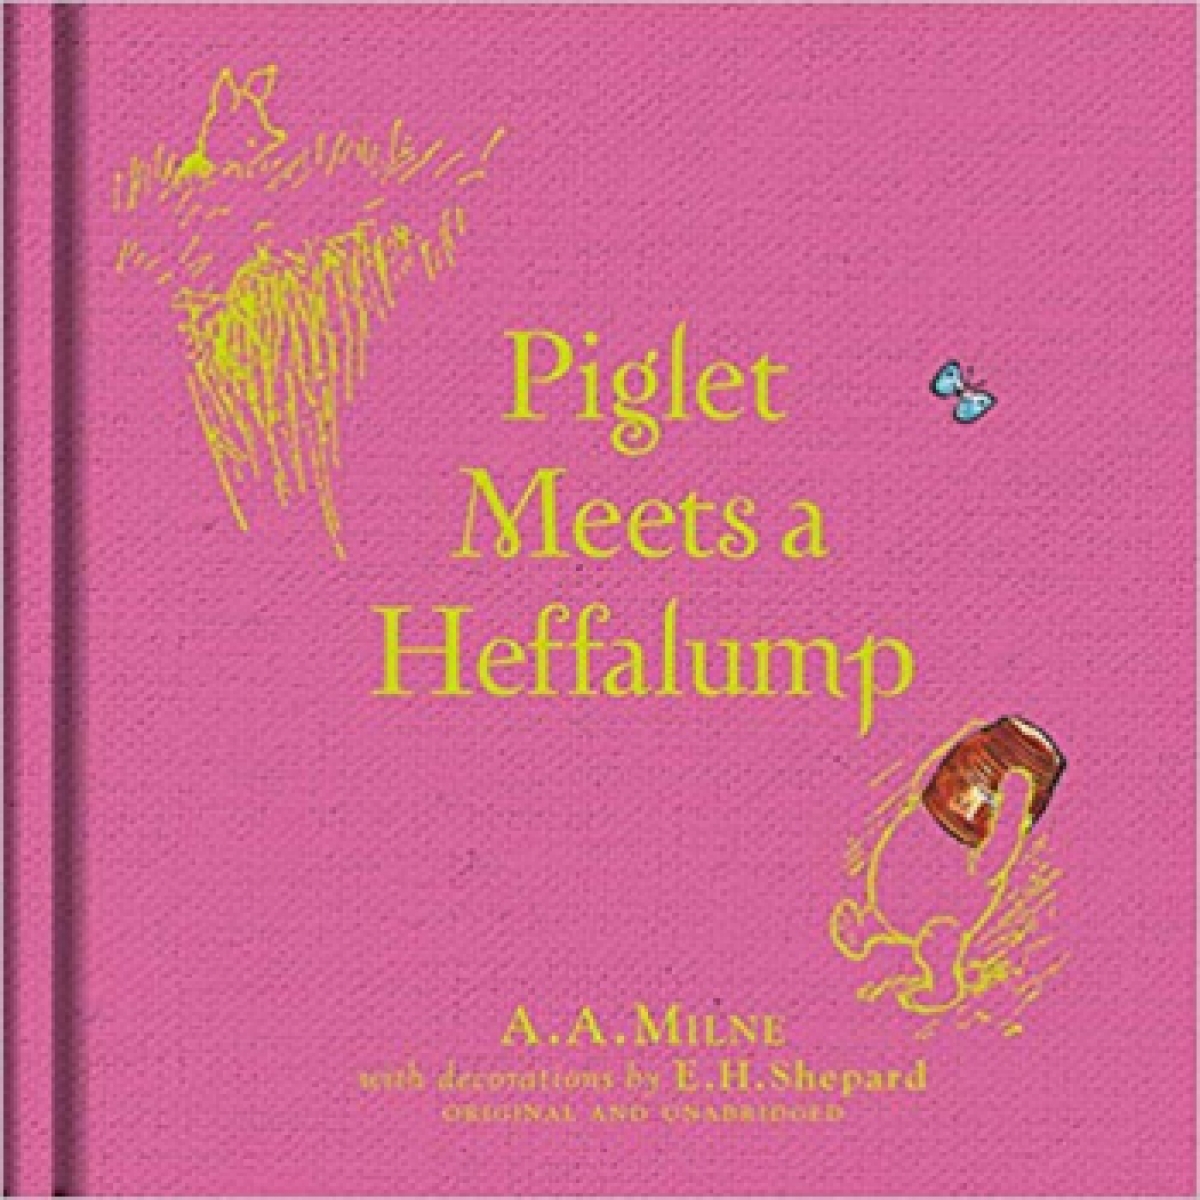 Milne A.A. Winnie-the-Pooh: Piglet Meets A Heffalump 